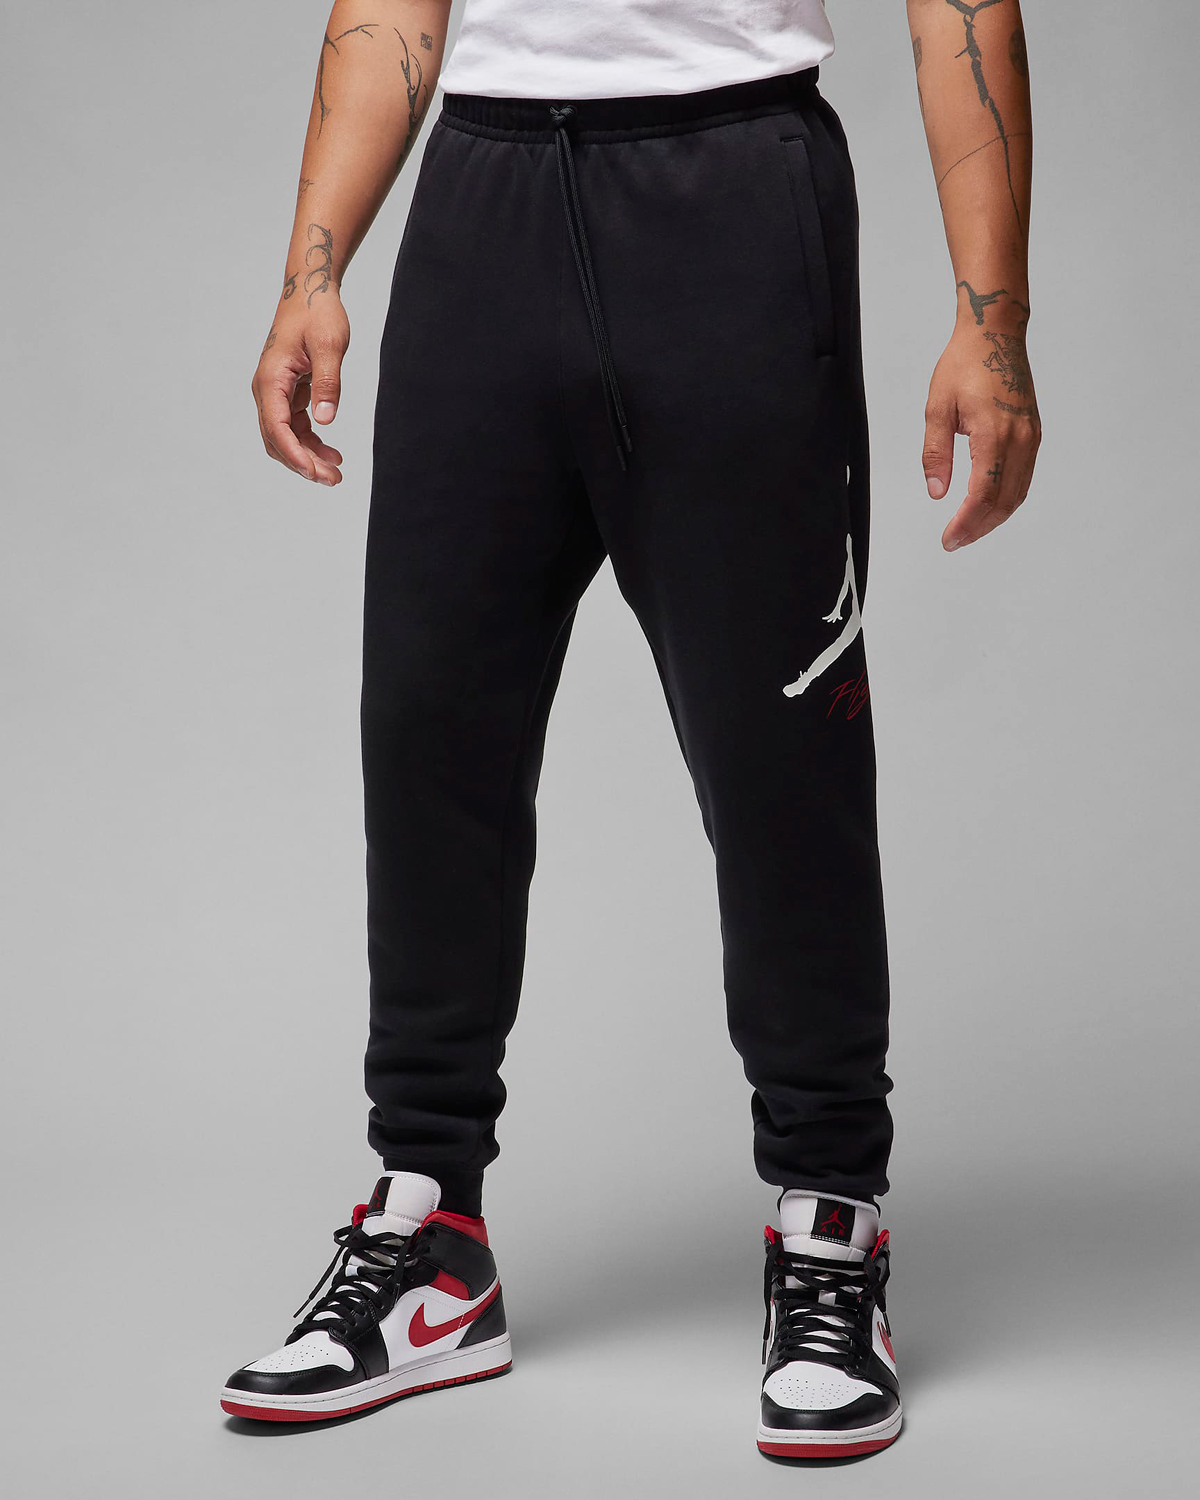 Jordan-Essentials-Fleece-Pants-Black-White-Red-1